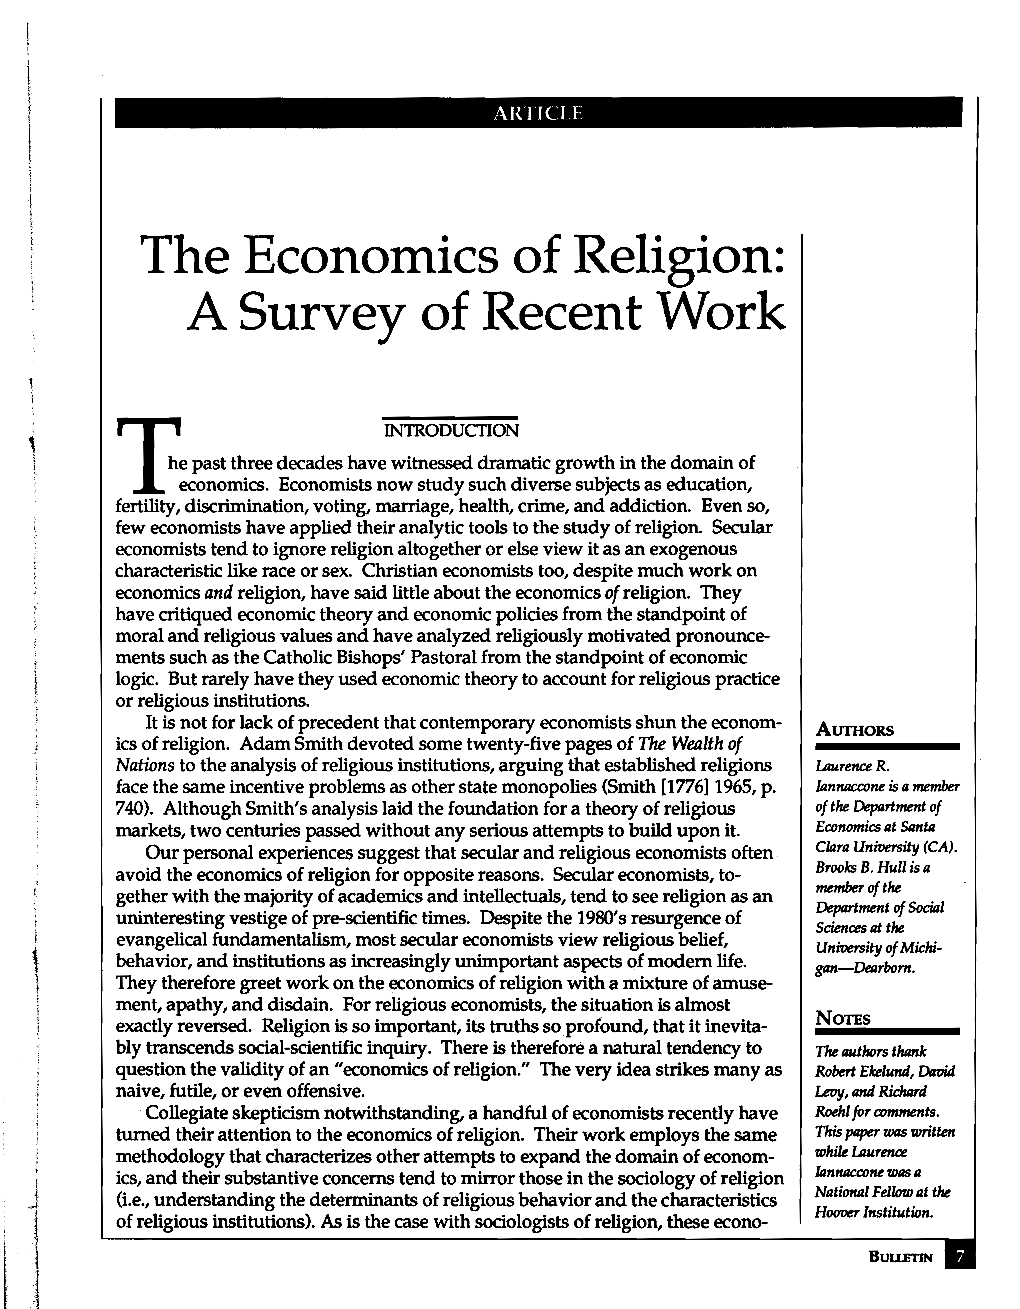 The Economics of Religion: a Survey of Recent Work